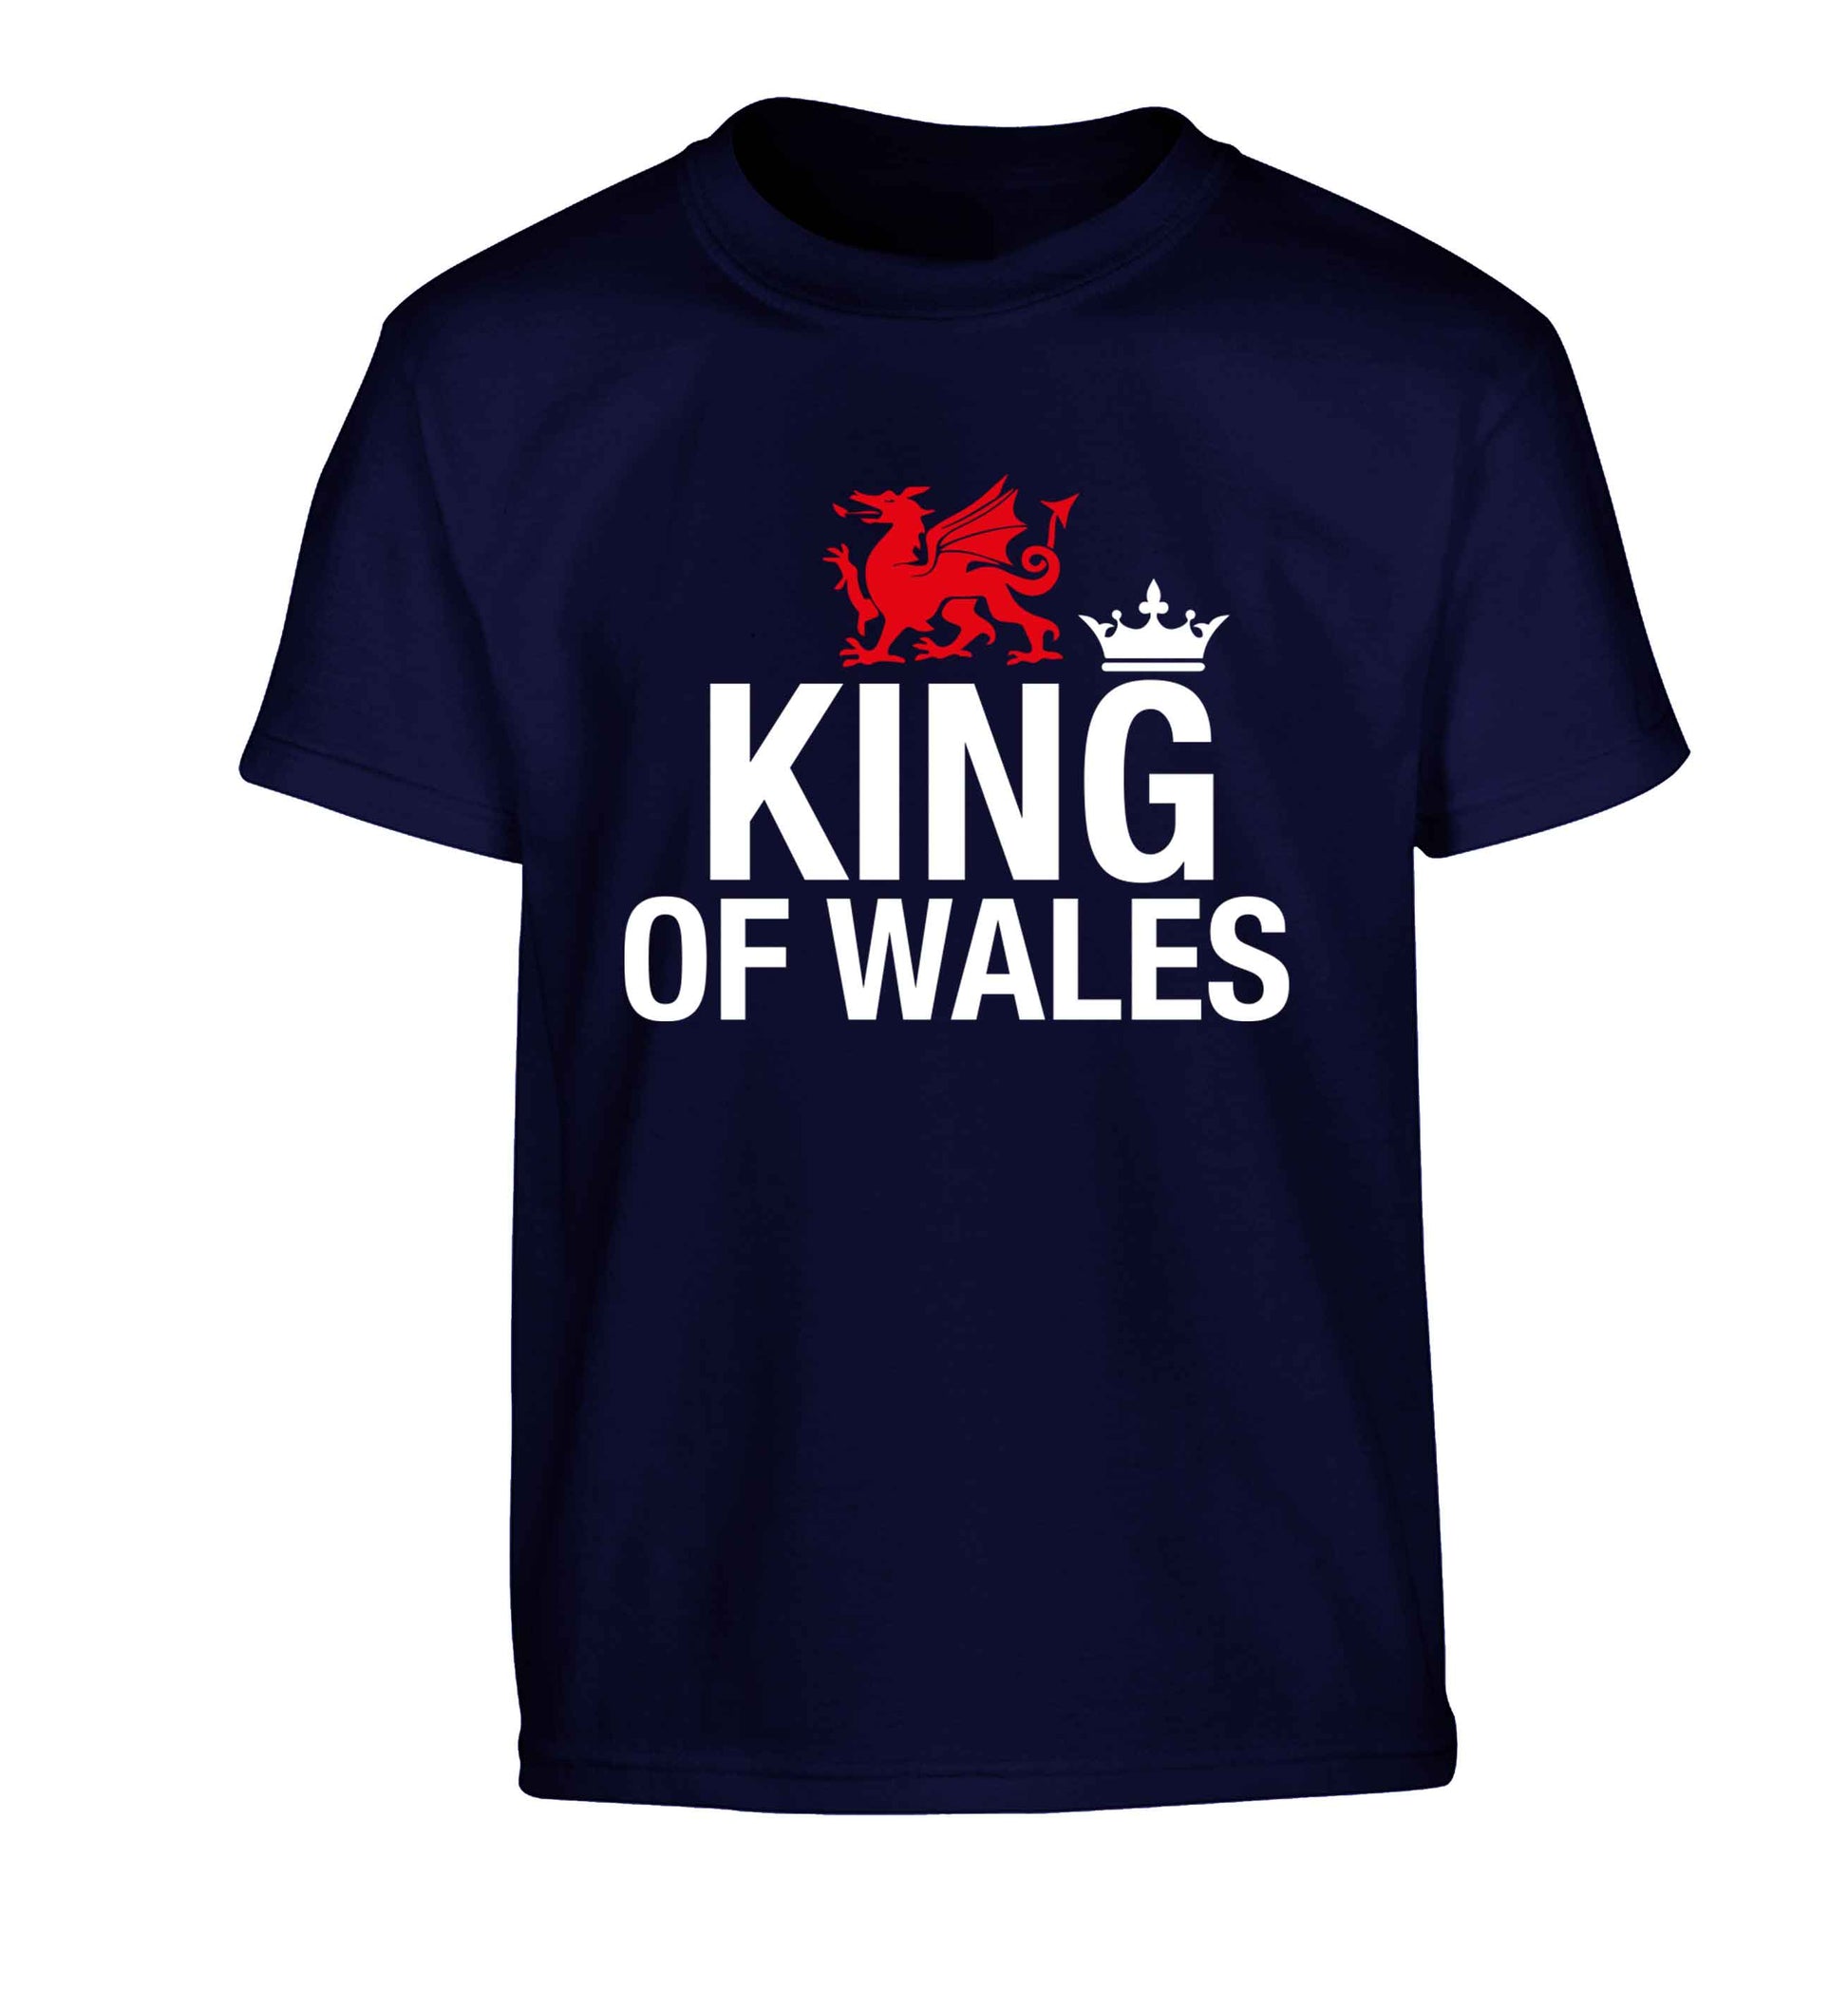 King of Wales Children's navy Tshirt 12-13 Years